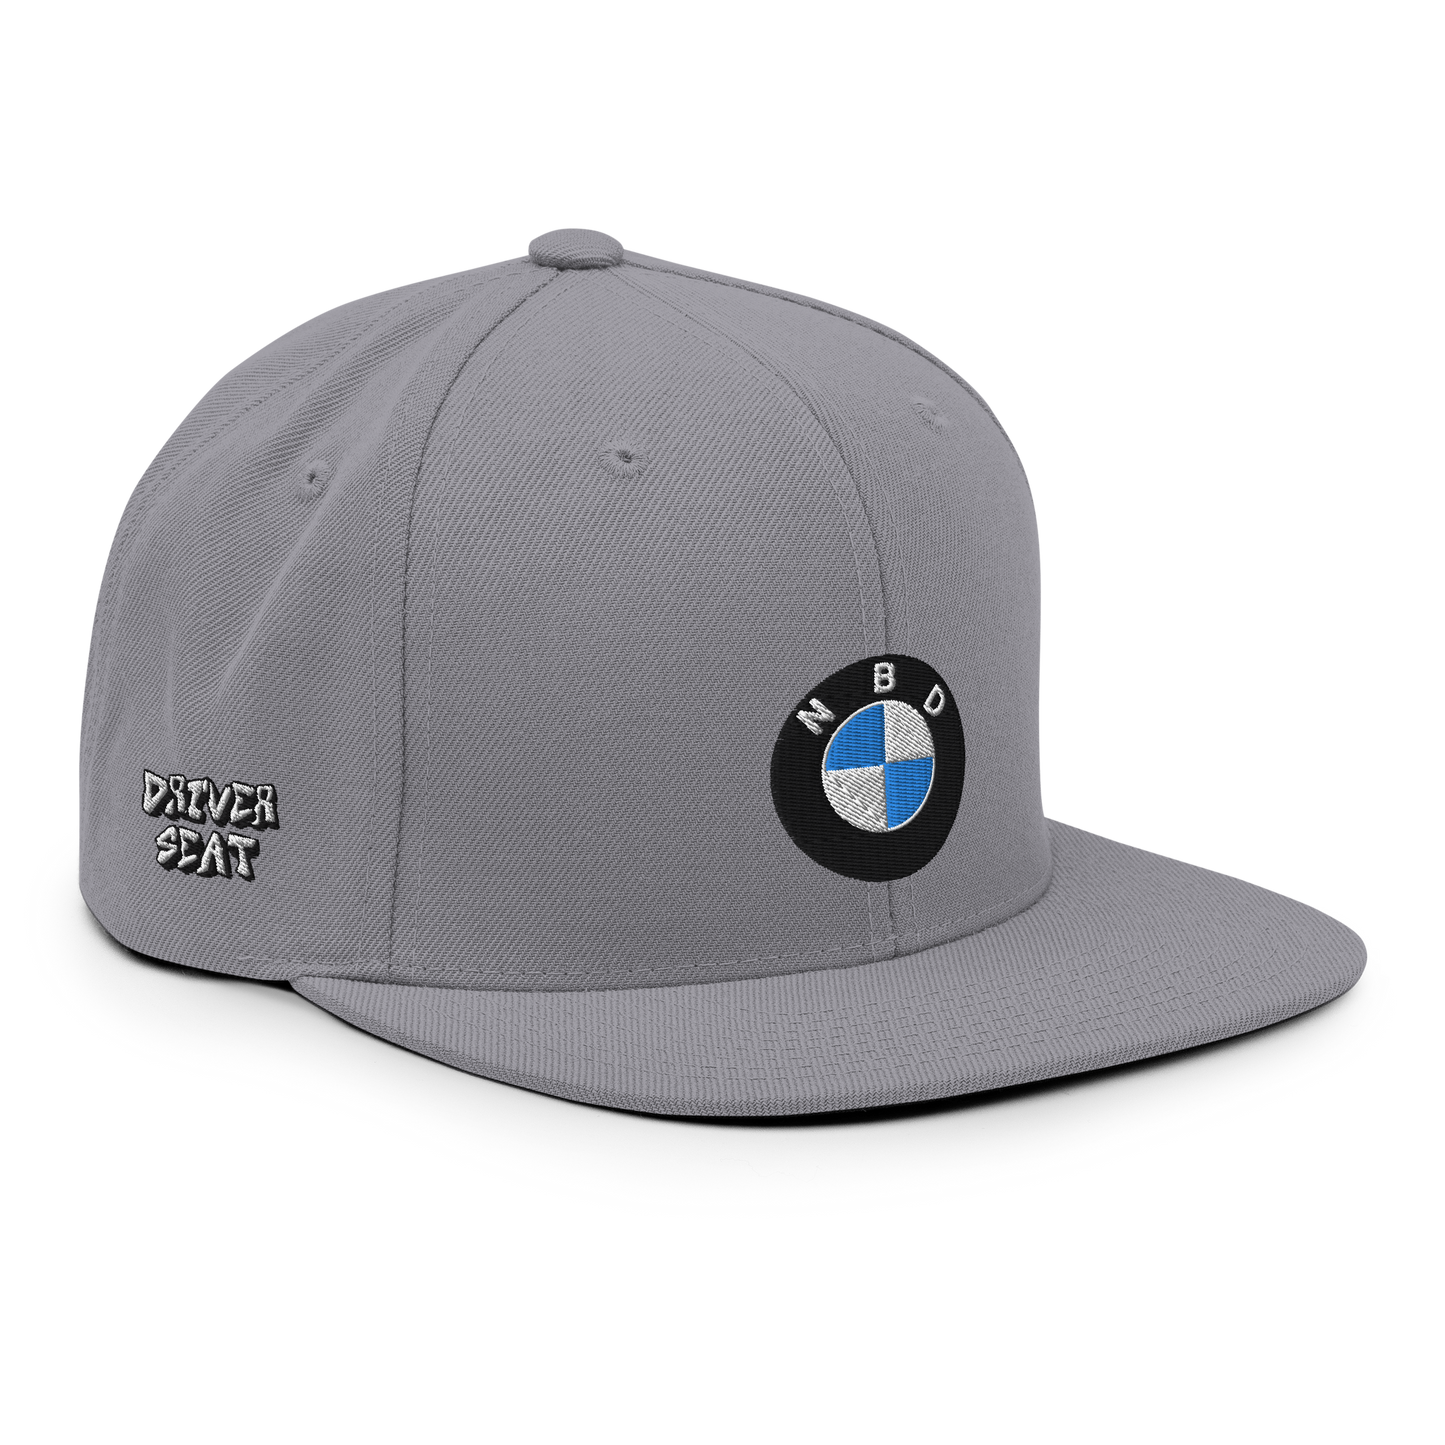 NBD Bimmer Hat Snapback - Silver